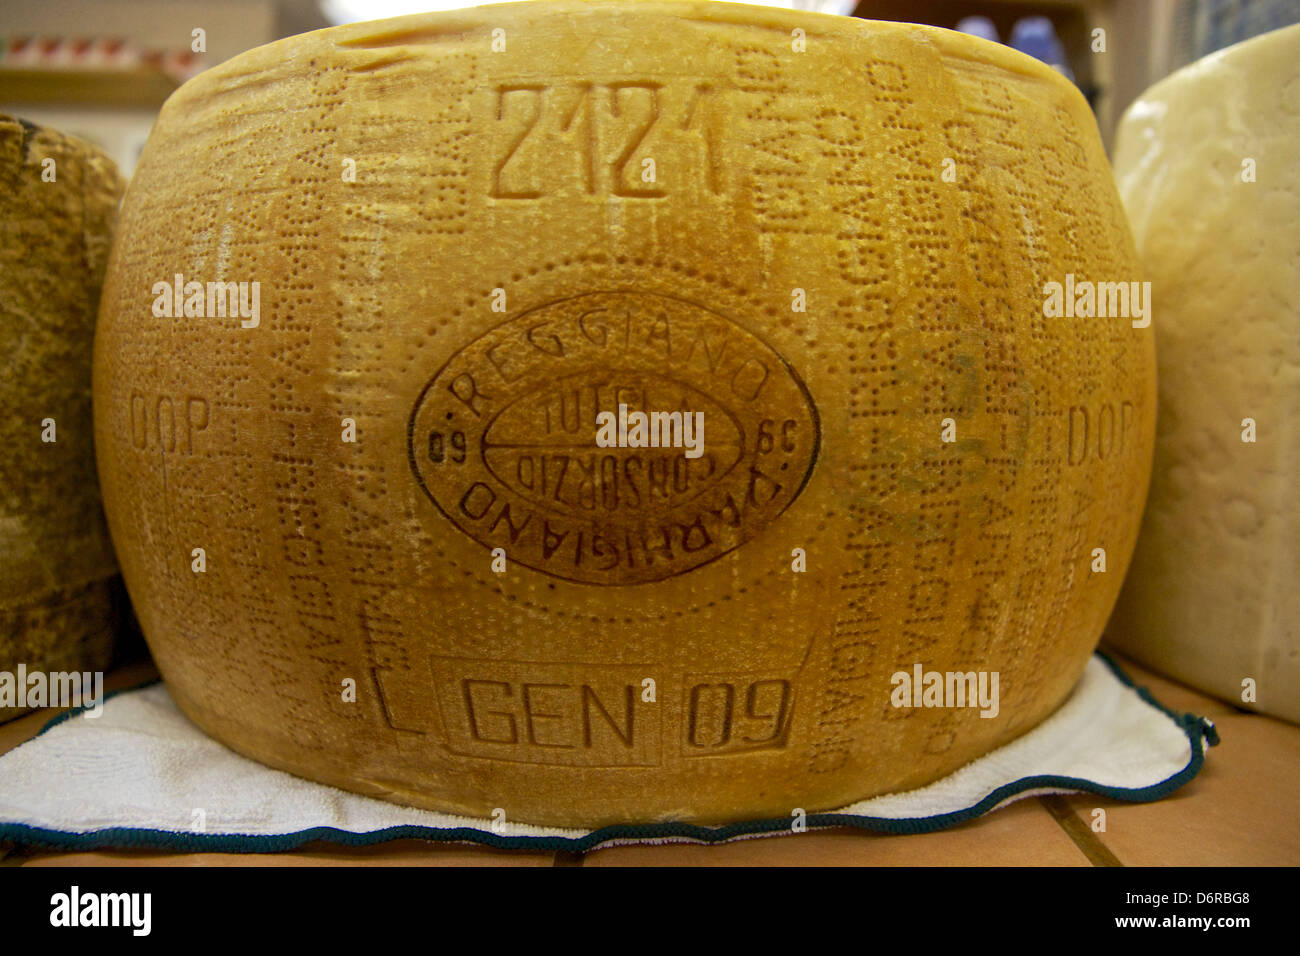 A wheel of Parmigiano Reggiano cheese. Stock Photo